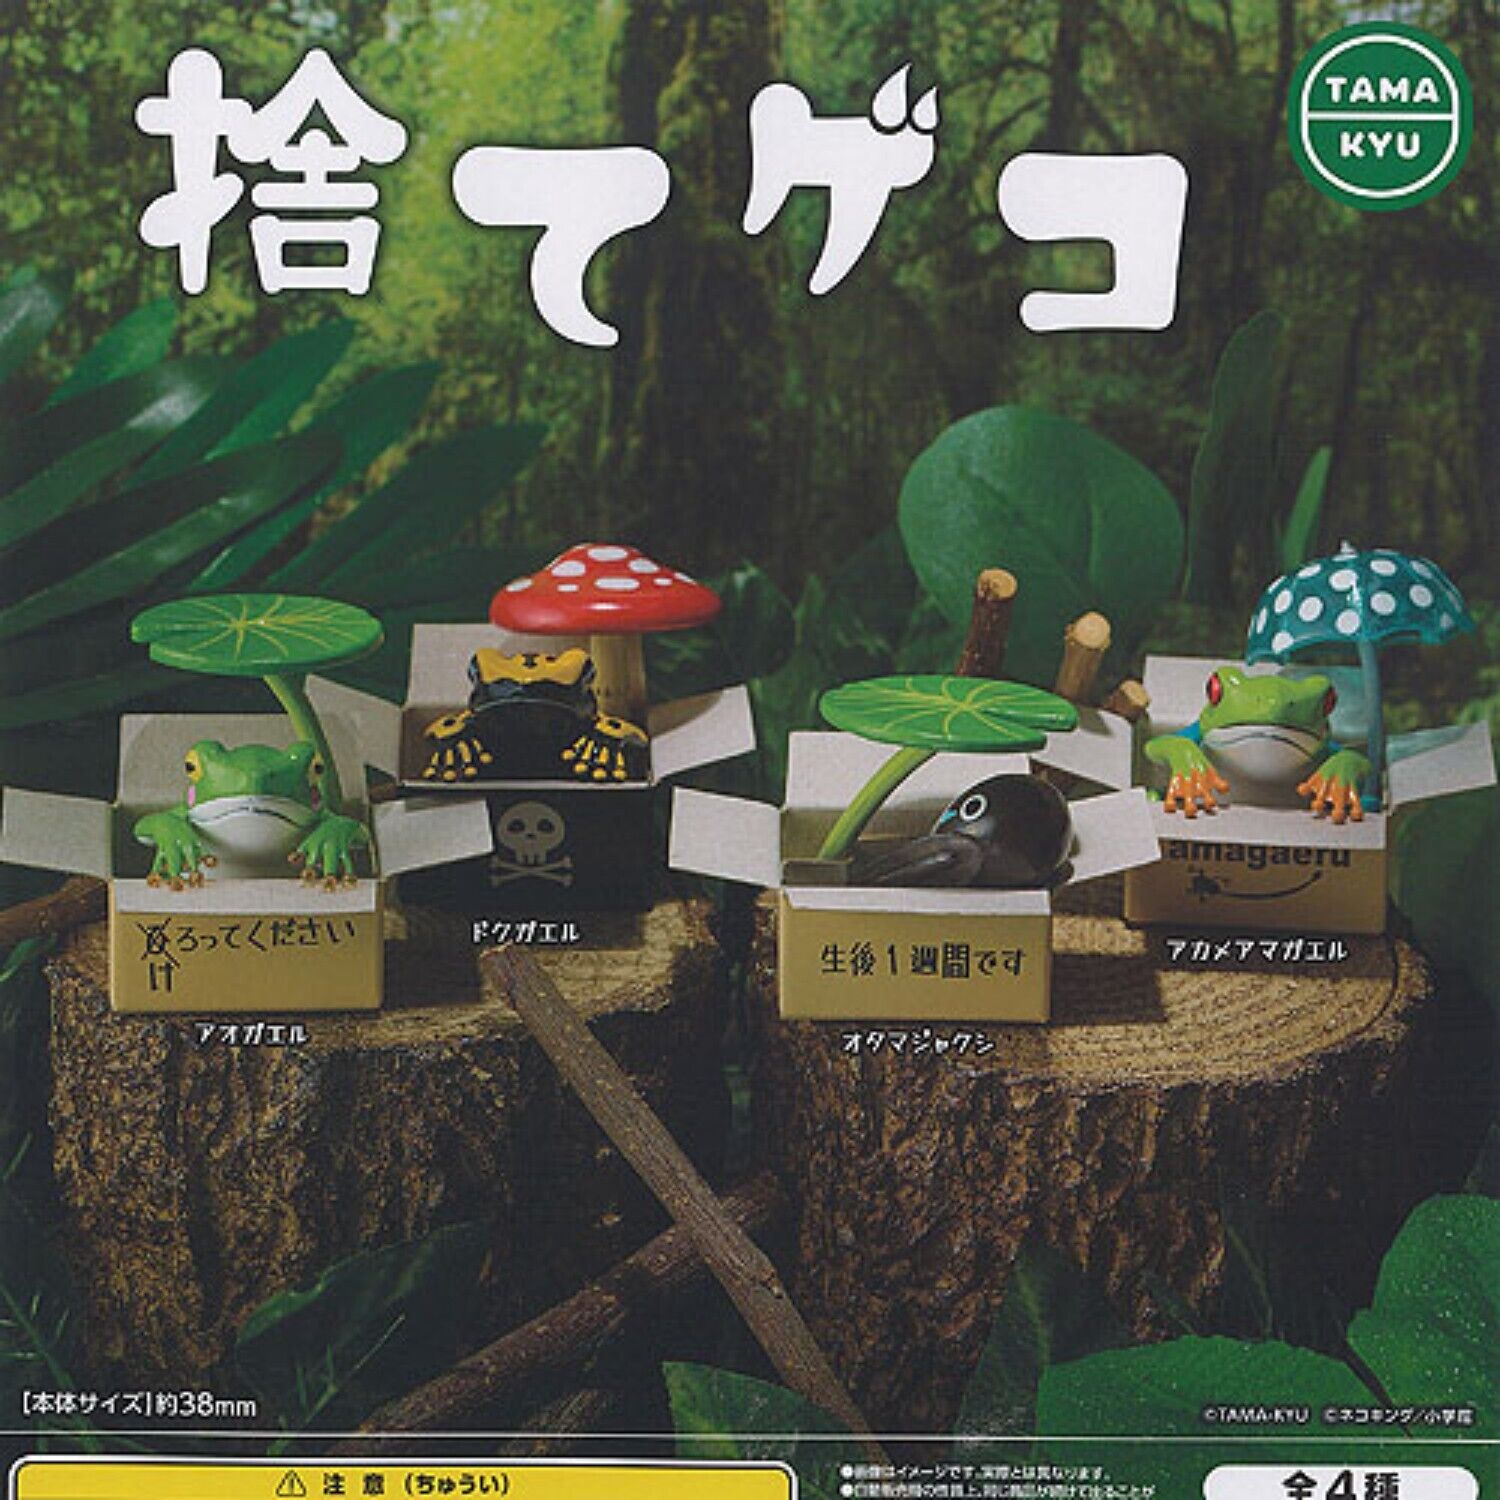 TAMA-KYU Sutegeko frog Mascot Capsule Toy 4 Types Full Comp Set Gacha New Japan